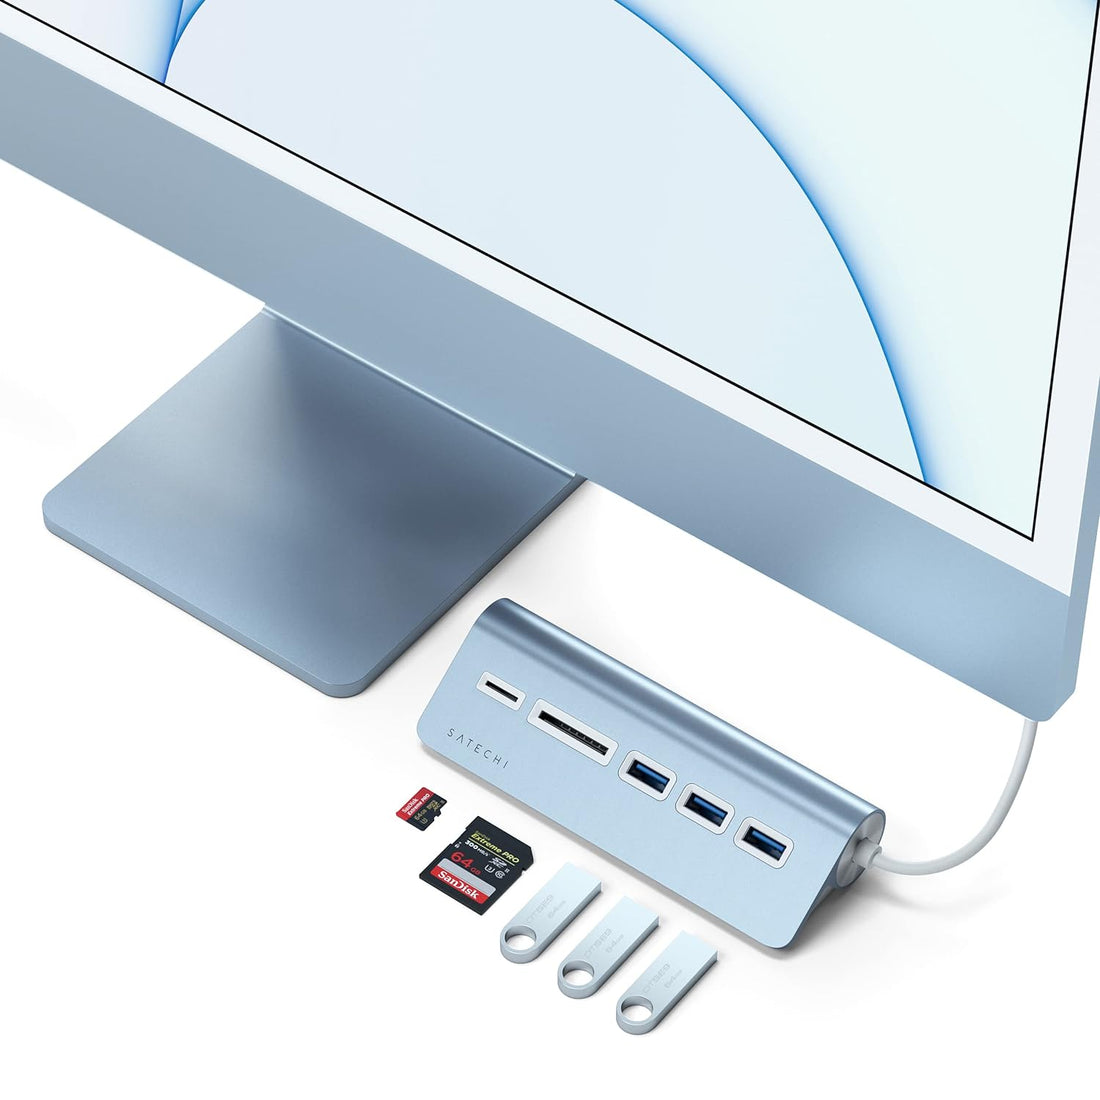 Satechi USB-C Combo Hub for Desktop - USB-A 3.0 Data Ports & Micro/SD Card Readers - for M2/ M1 MacBook Pro/Air, M2/ M1 iPad Pro/Air, M2 Mac Mini, iMac M1 (Blue)